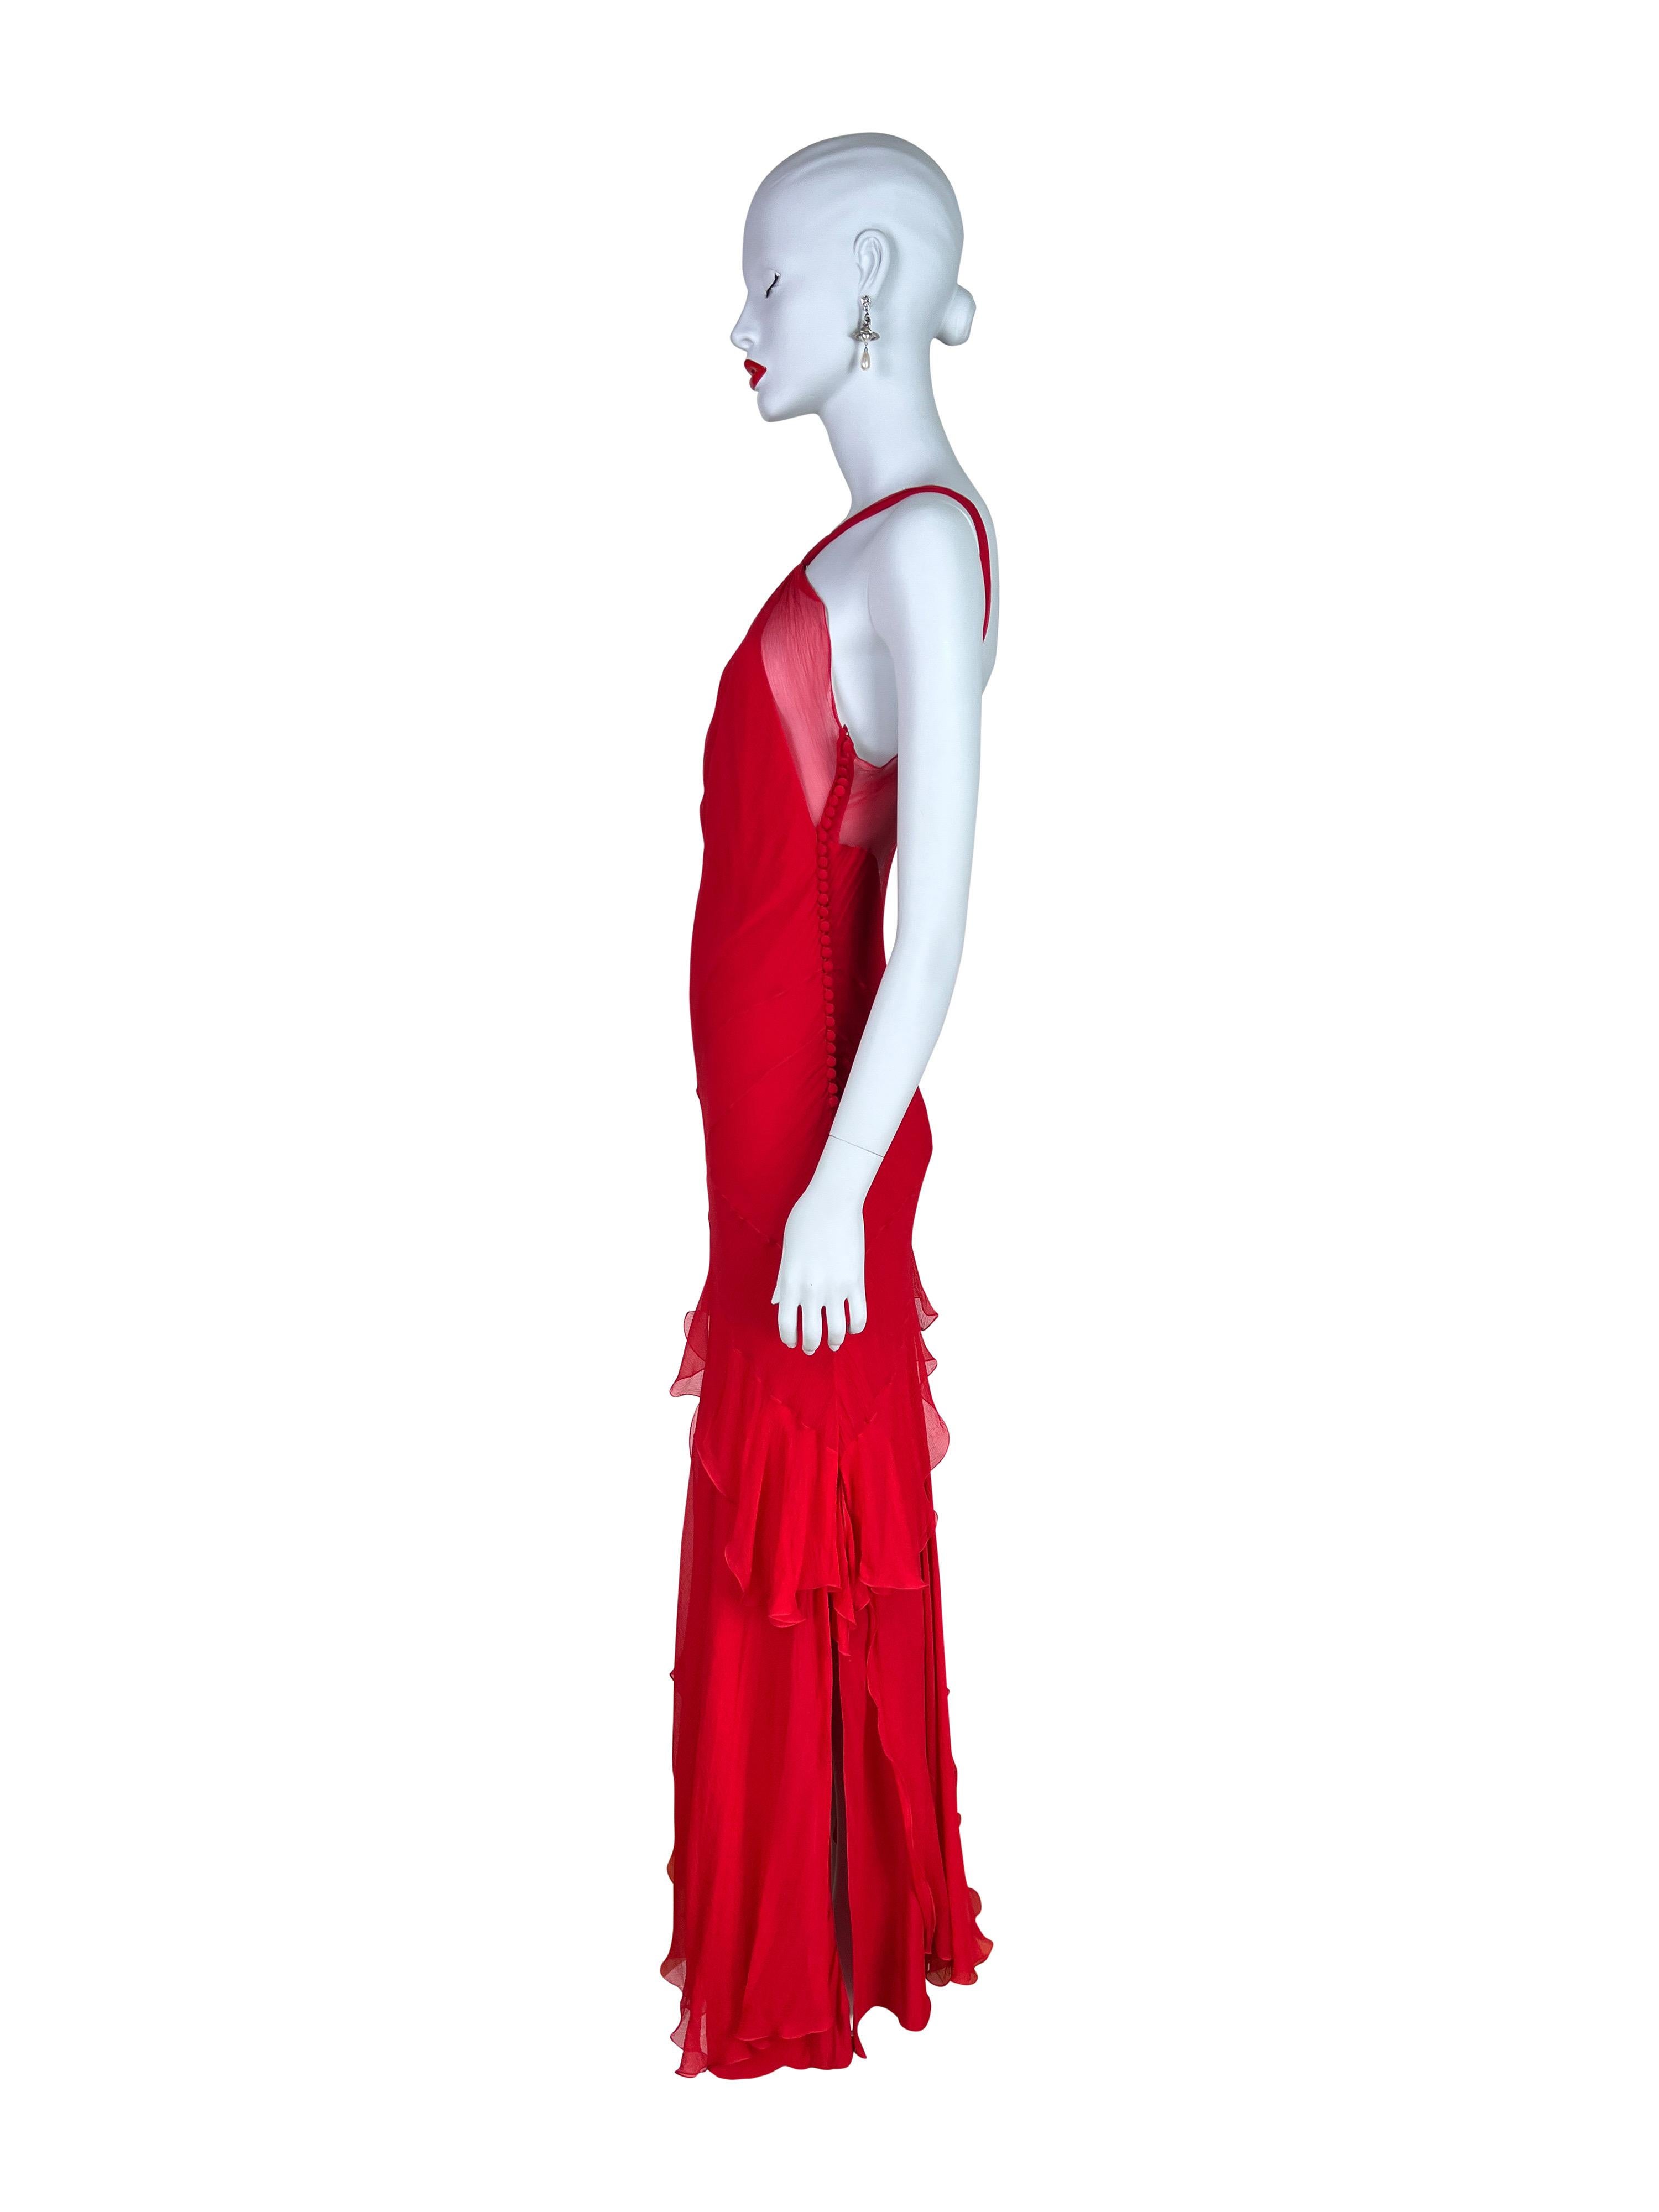 Dior by John Galliano Spring 2004 Red Bias Cut Silk Chiffon Dress 6